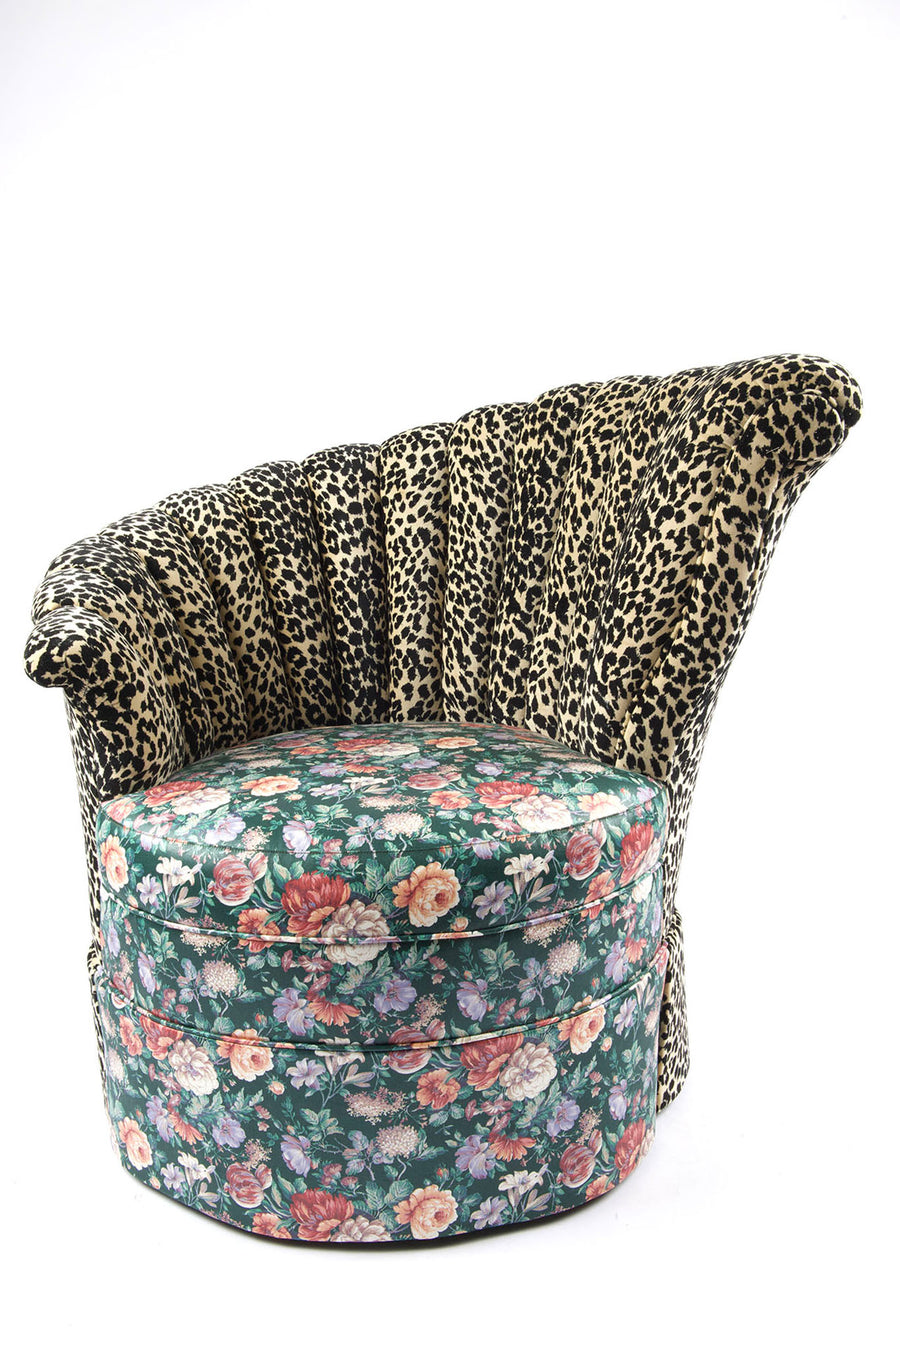 BATSHEVA - Nautilus Chair in Vintage Floral and Leopard Velvet Fabric